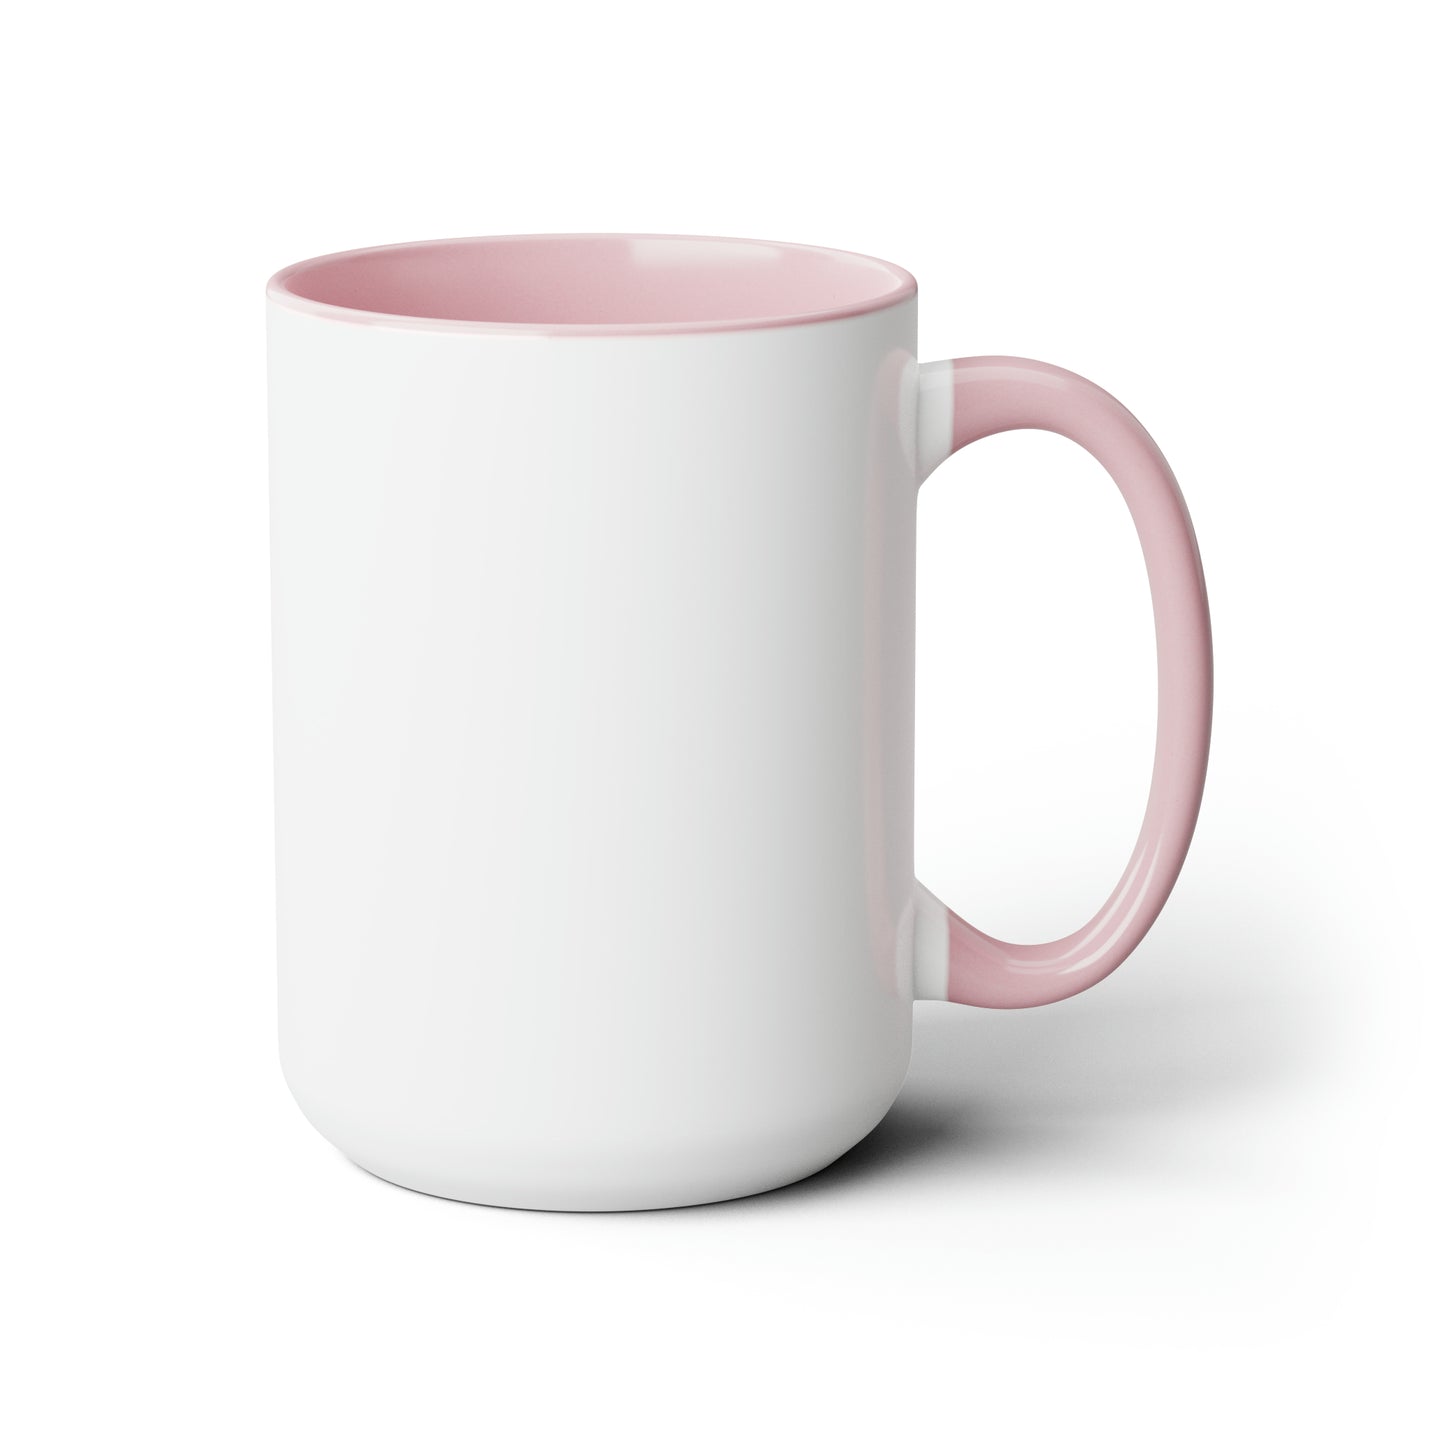 Ctrl + Alt + Del mug